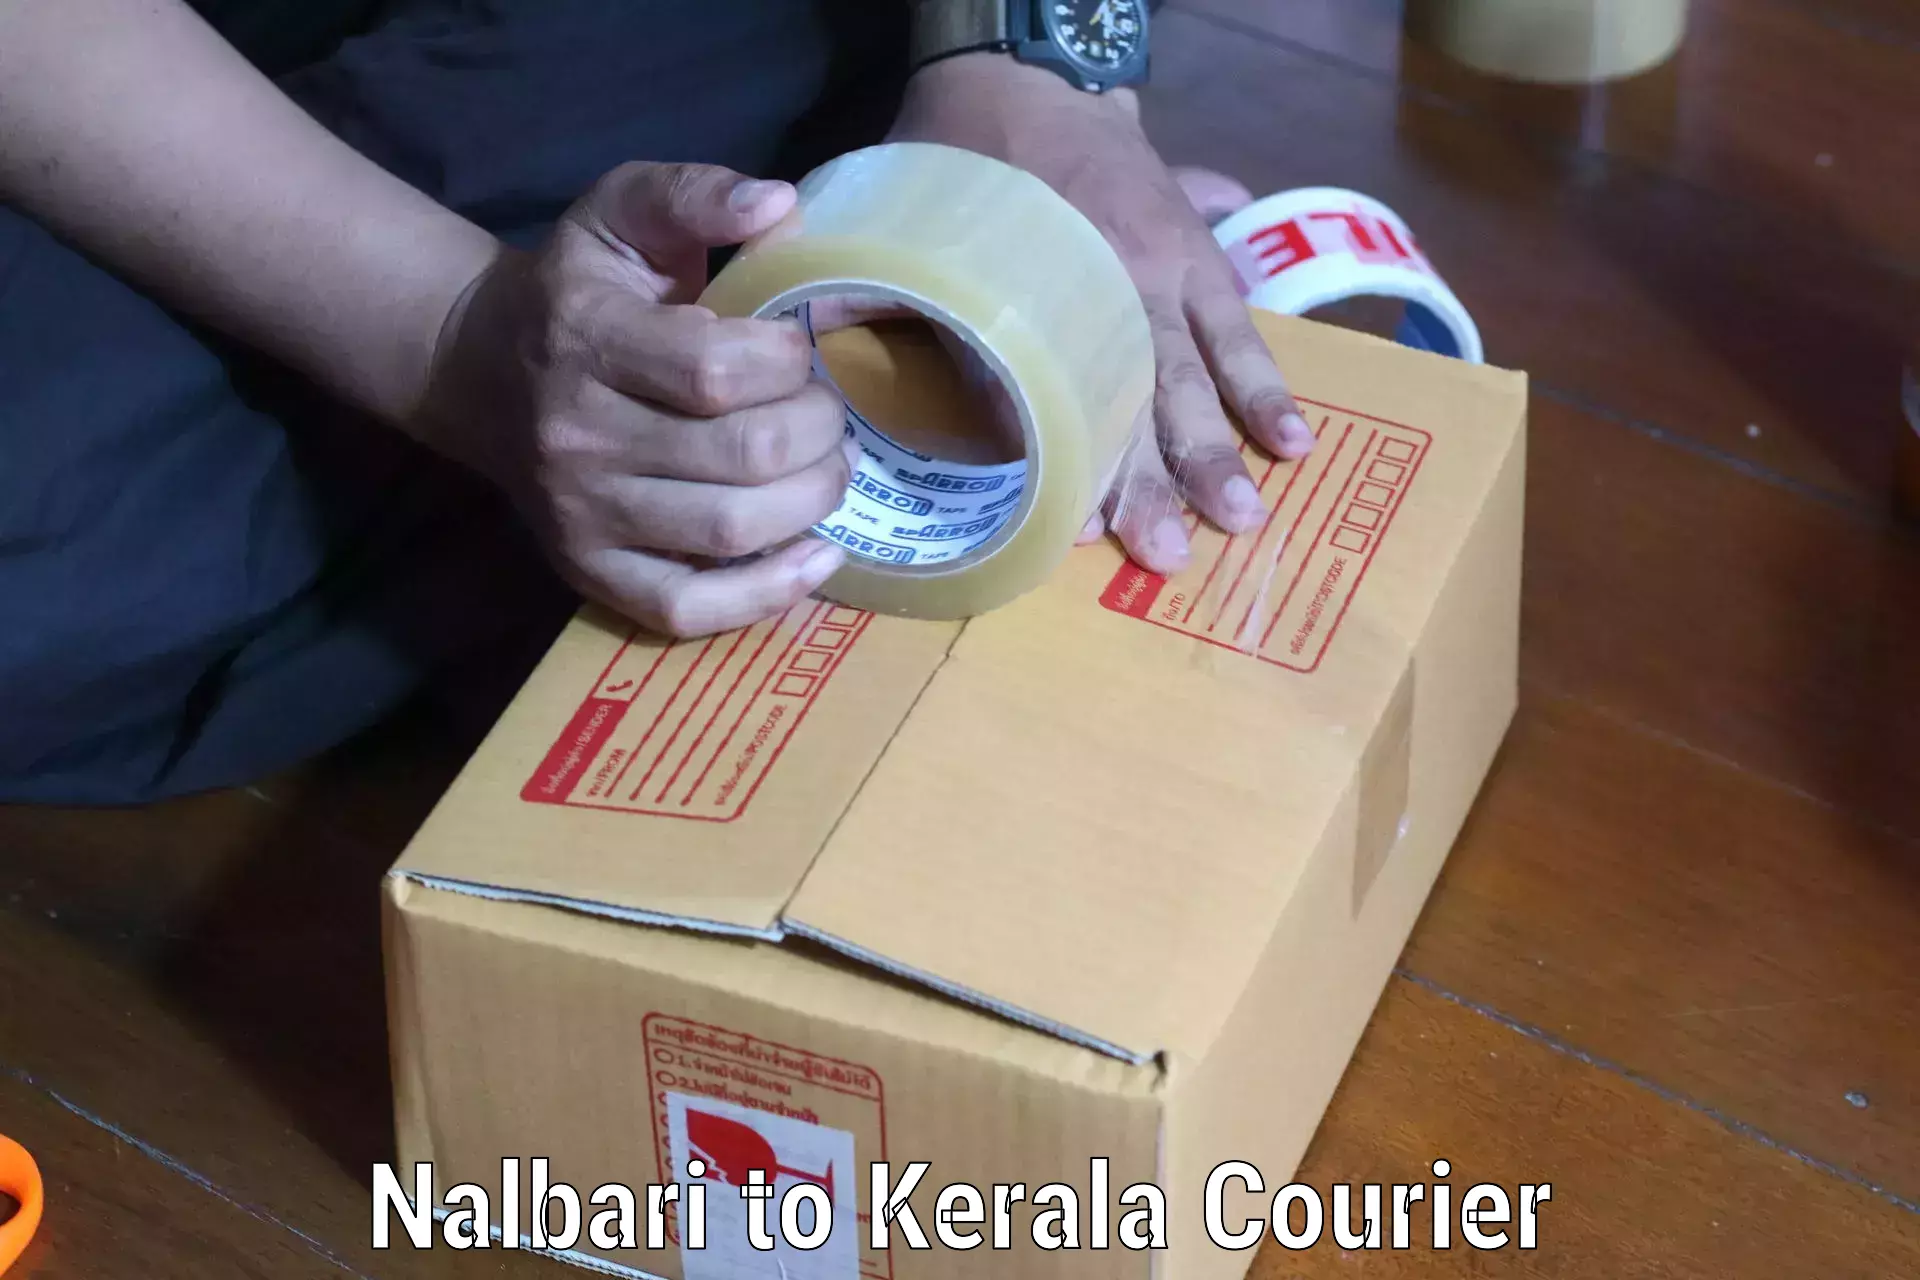 Cash on delivery service Nalbari to Pandikkad